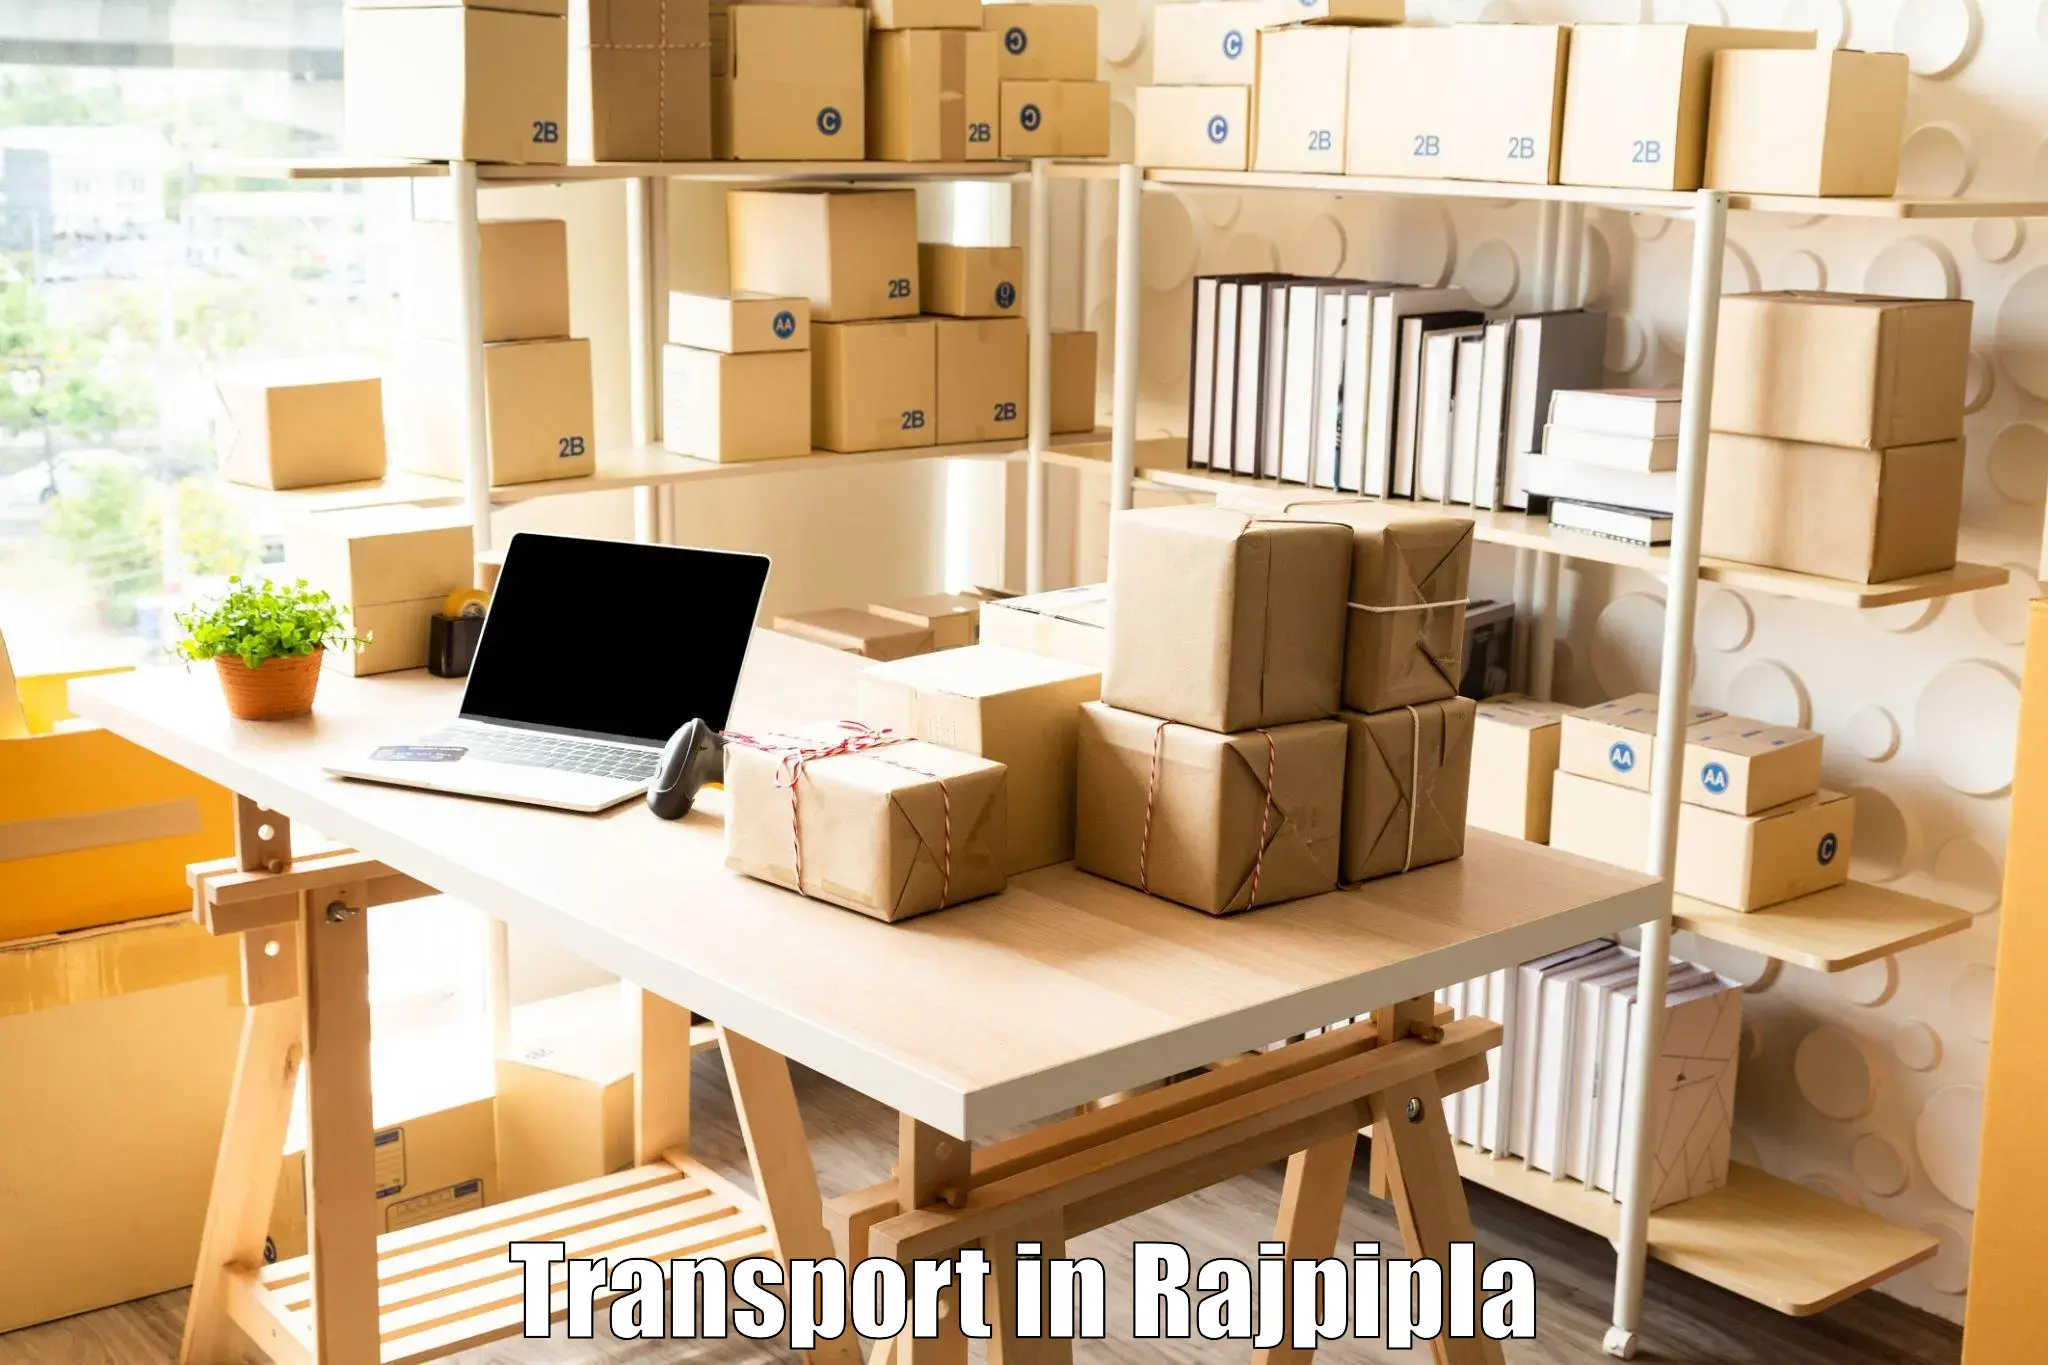 Road transport online services in Rajpipla